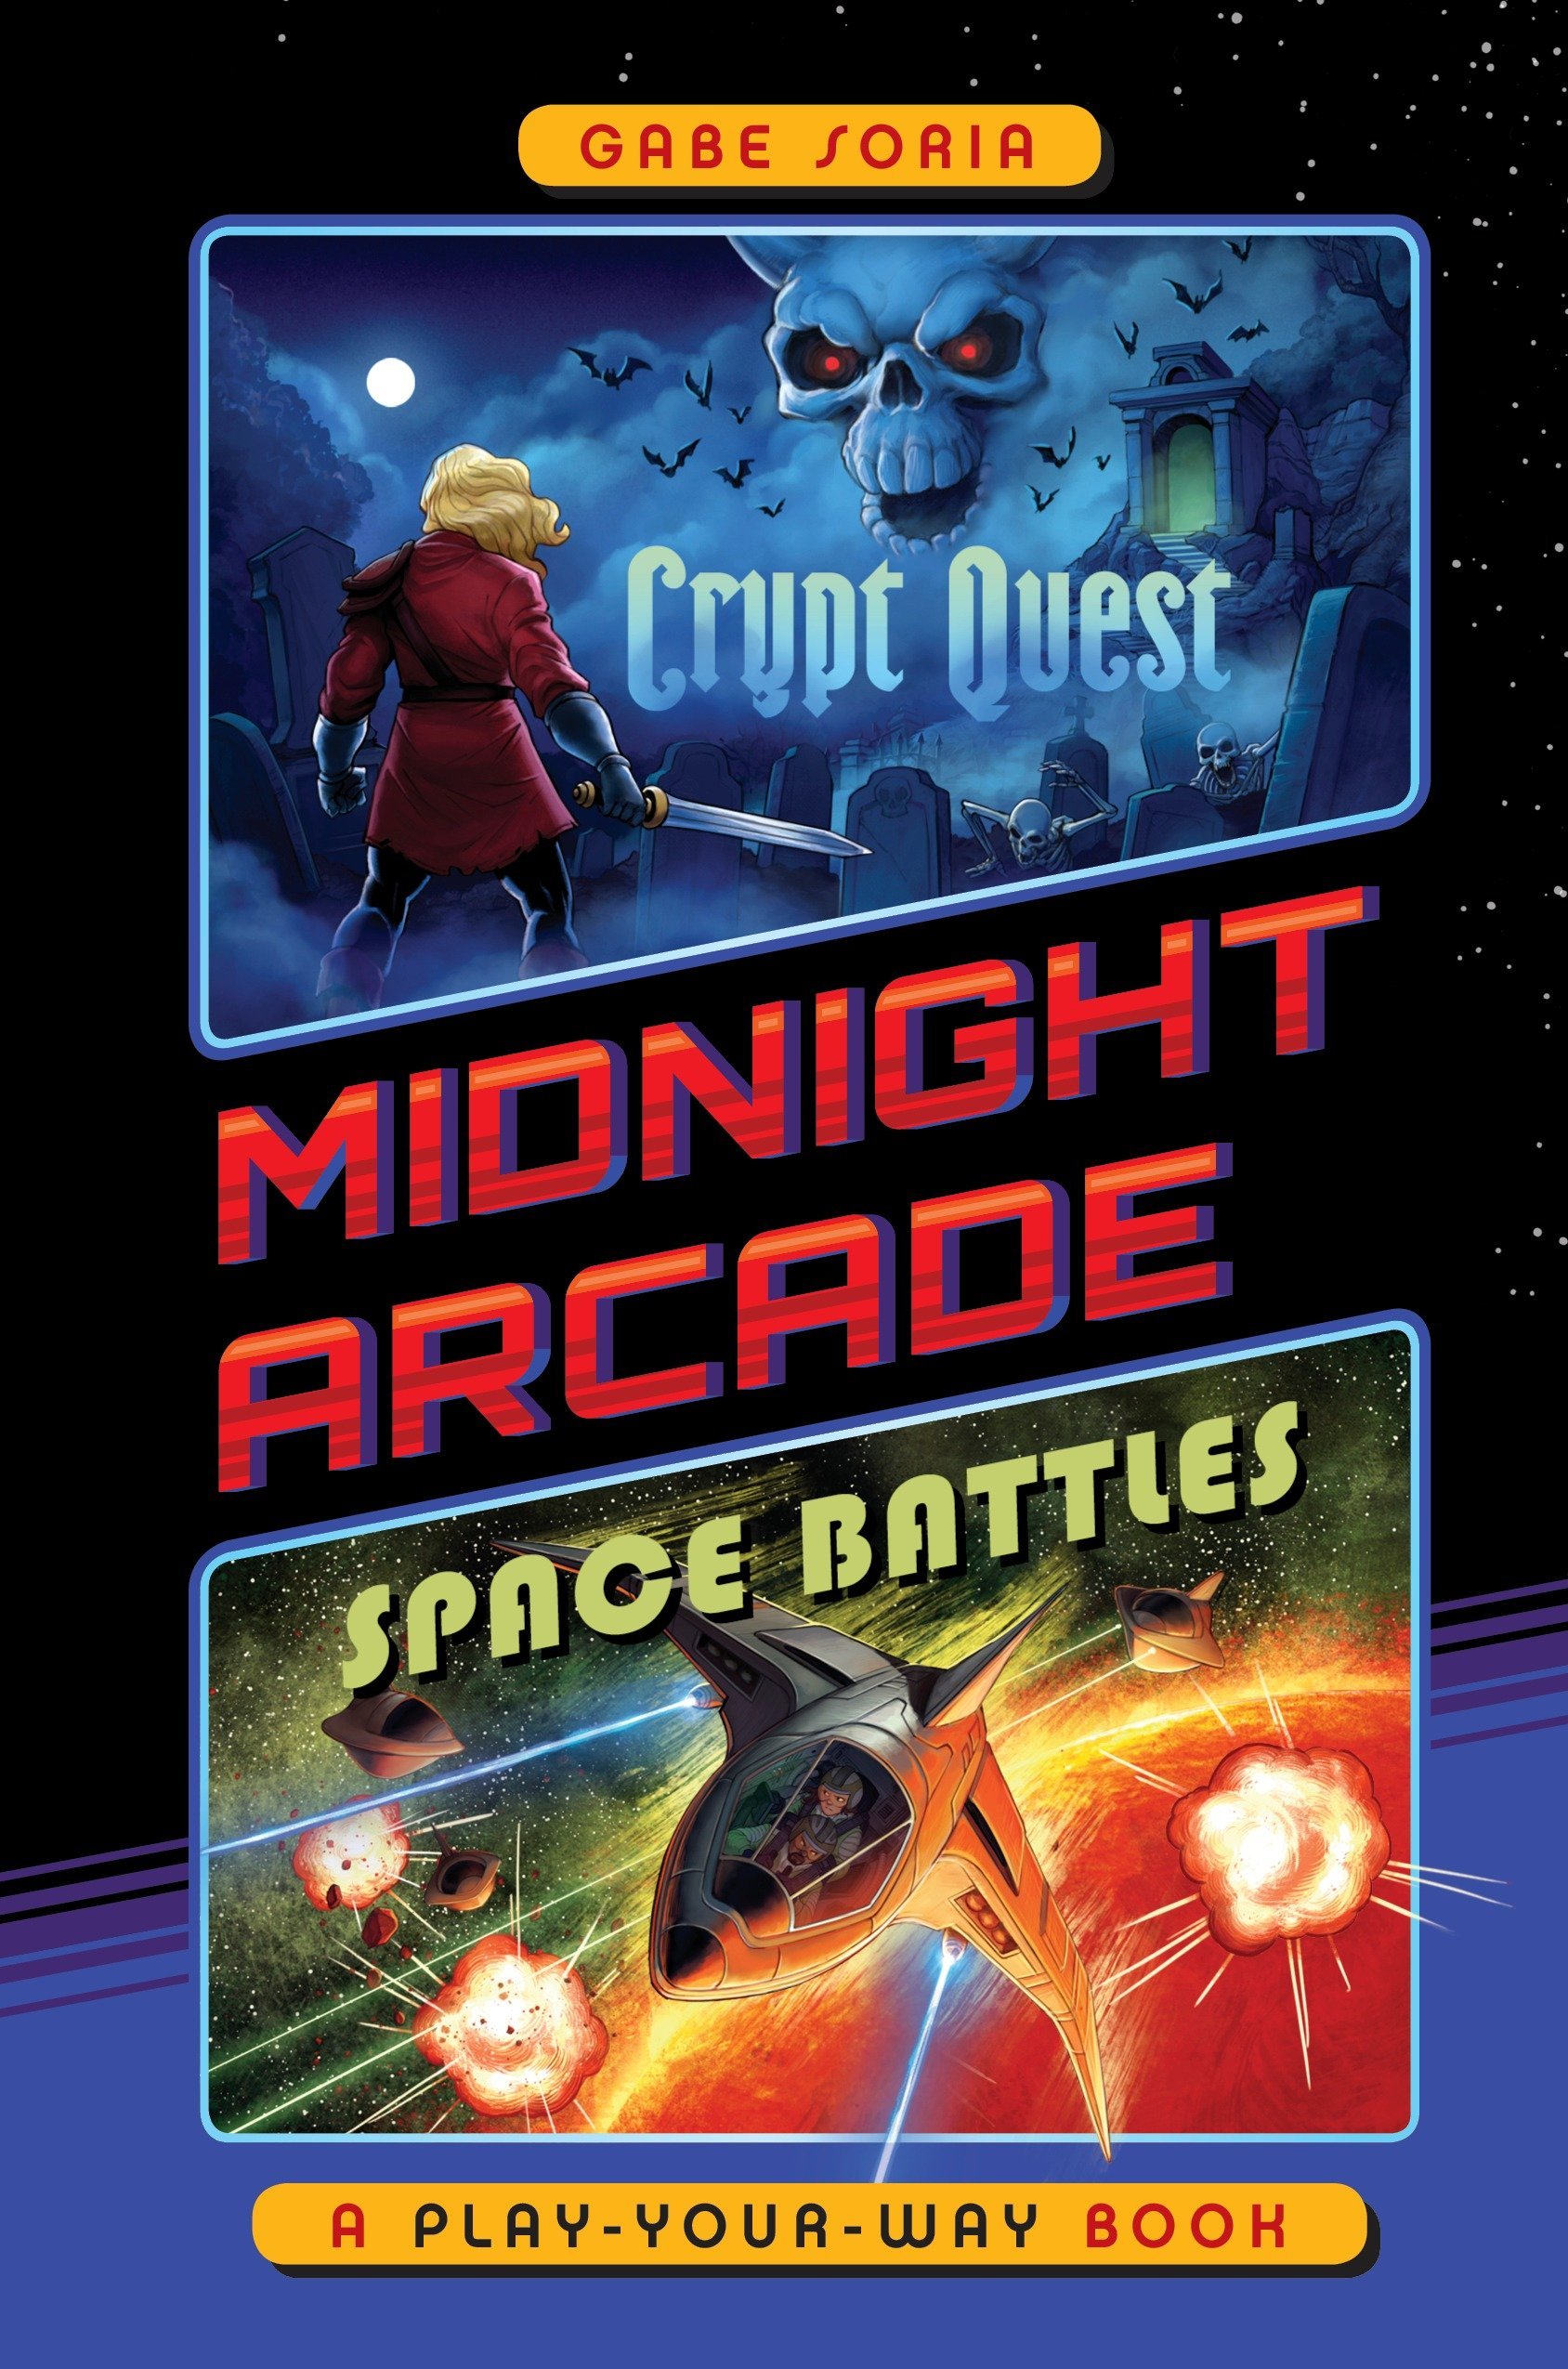 Vezi detalii pentru Crypt Quest - Space Battles | Gabe Soria